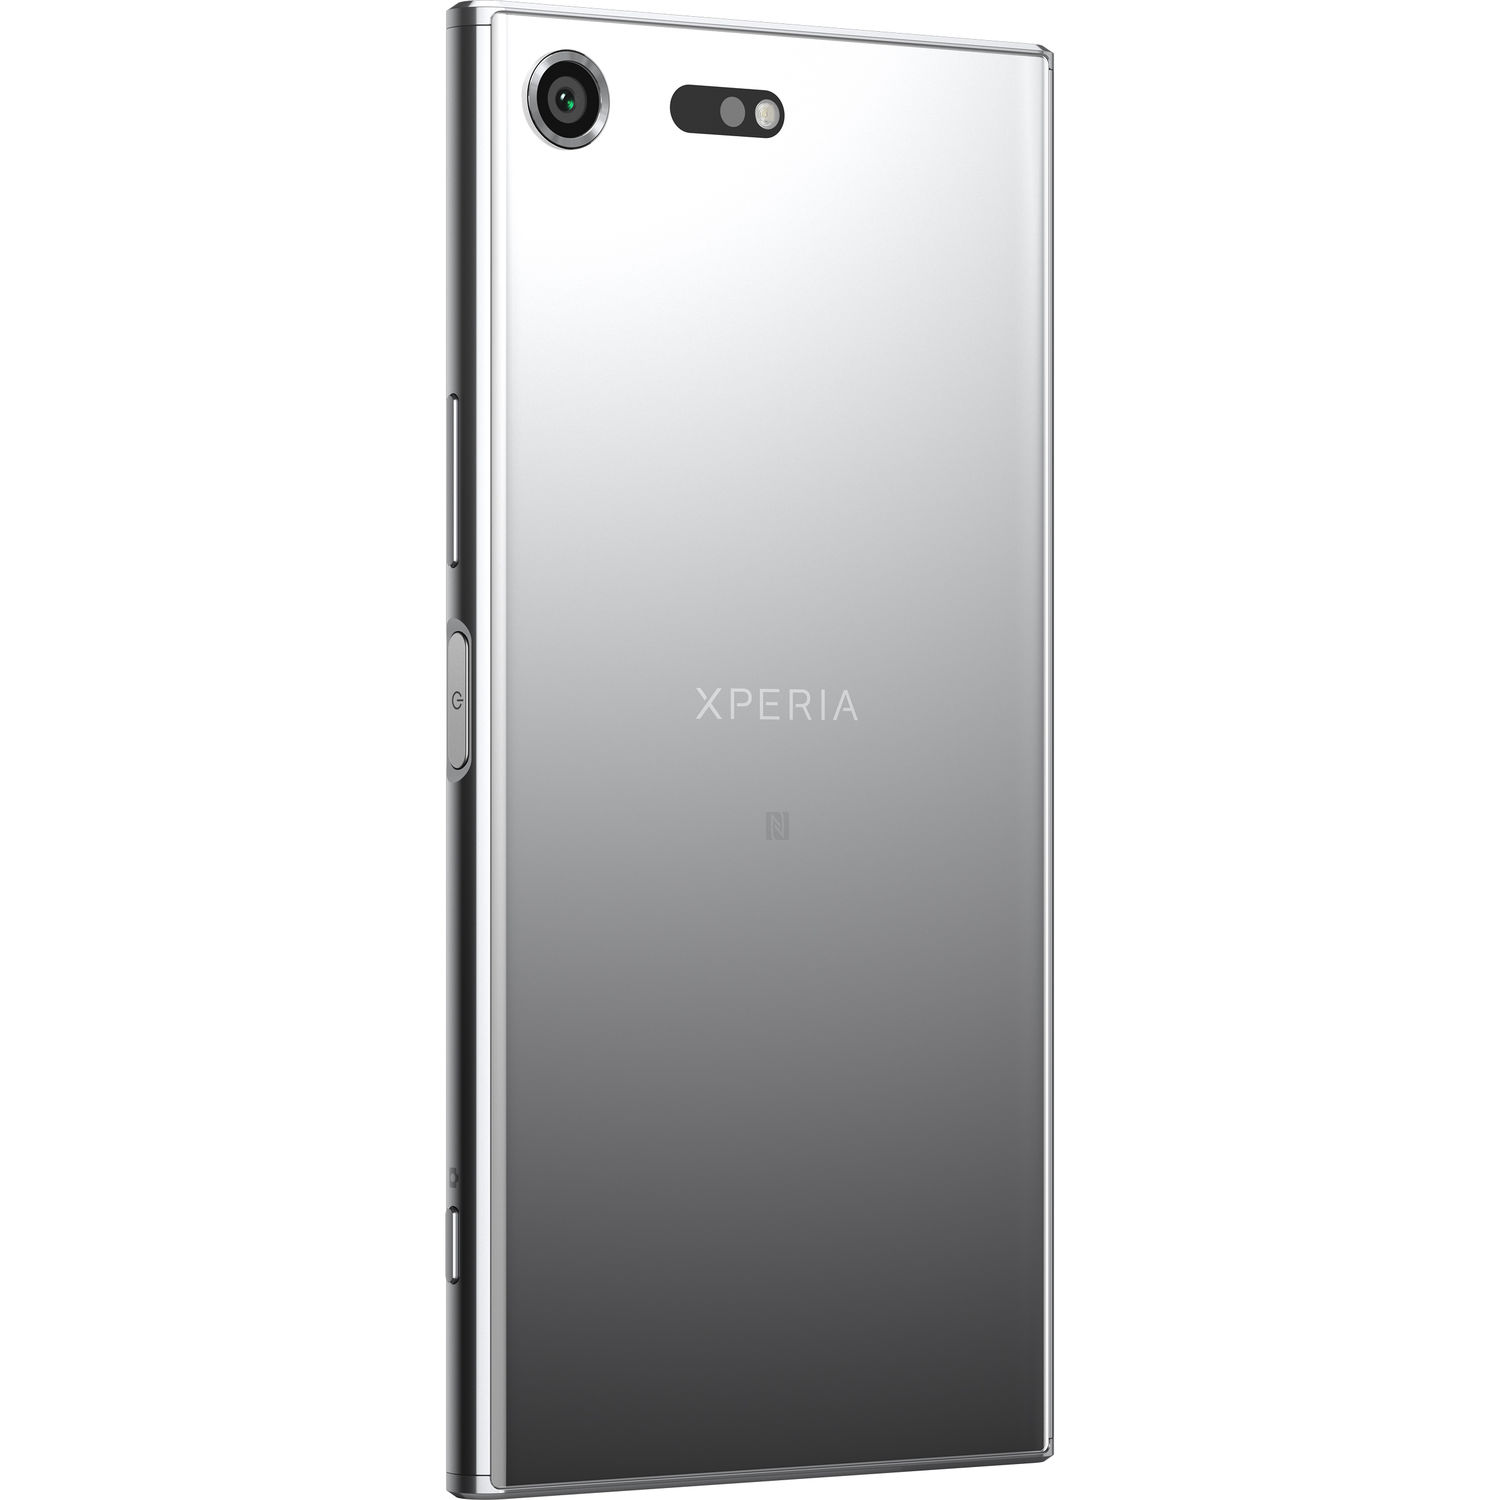 Sony Xperia Xz Premium G8142 64gb Smartphone 1308 4908 B H Photo